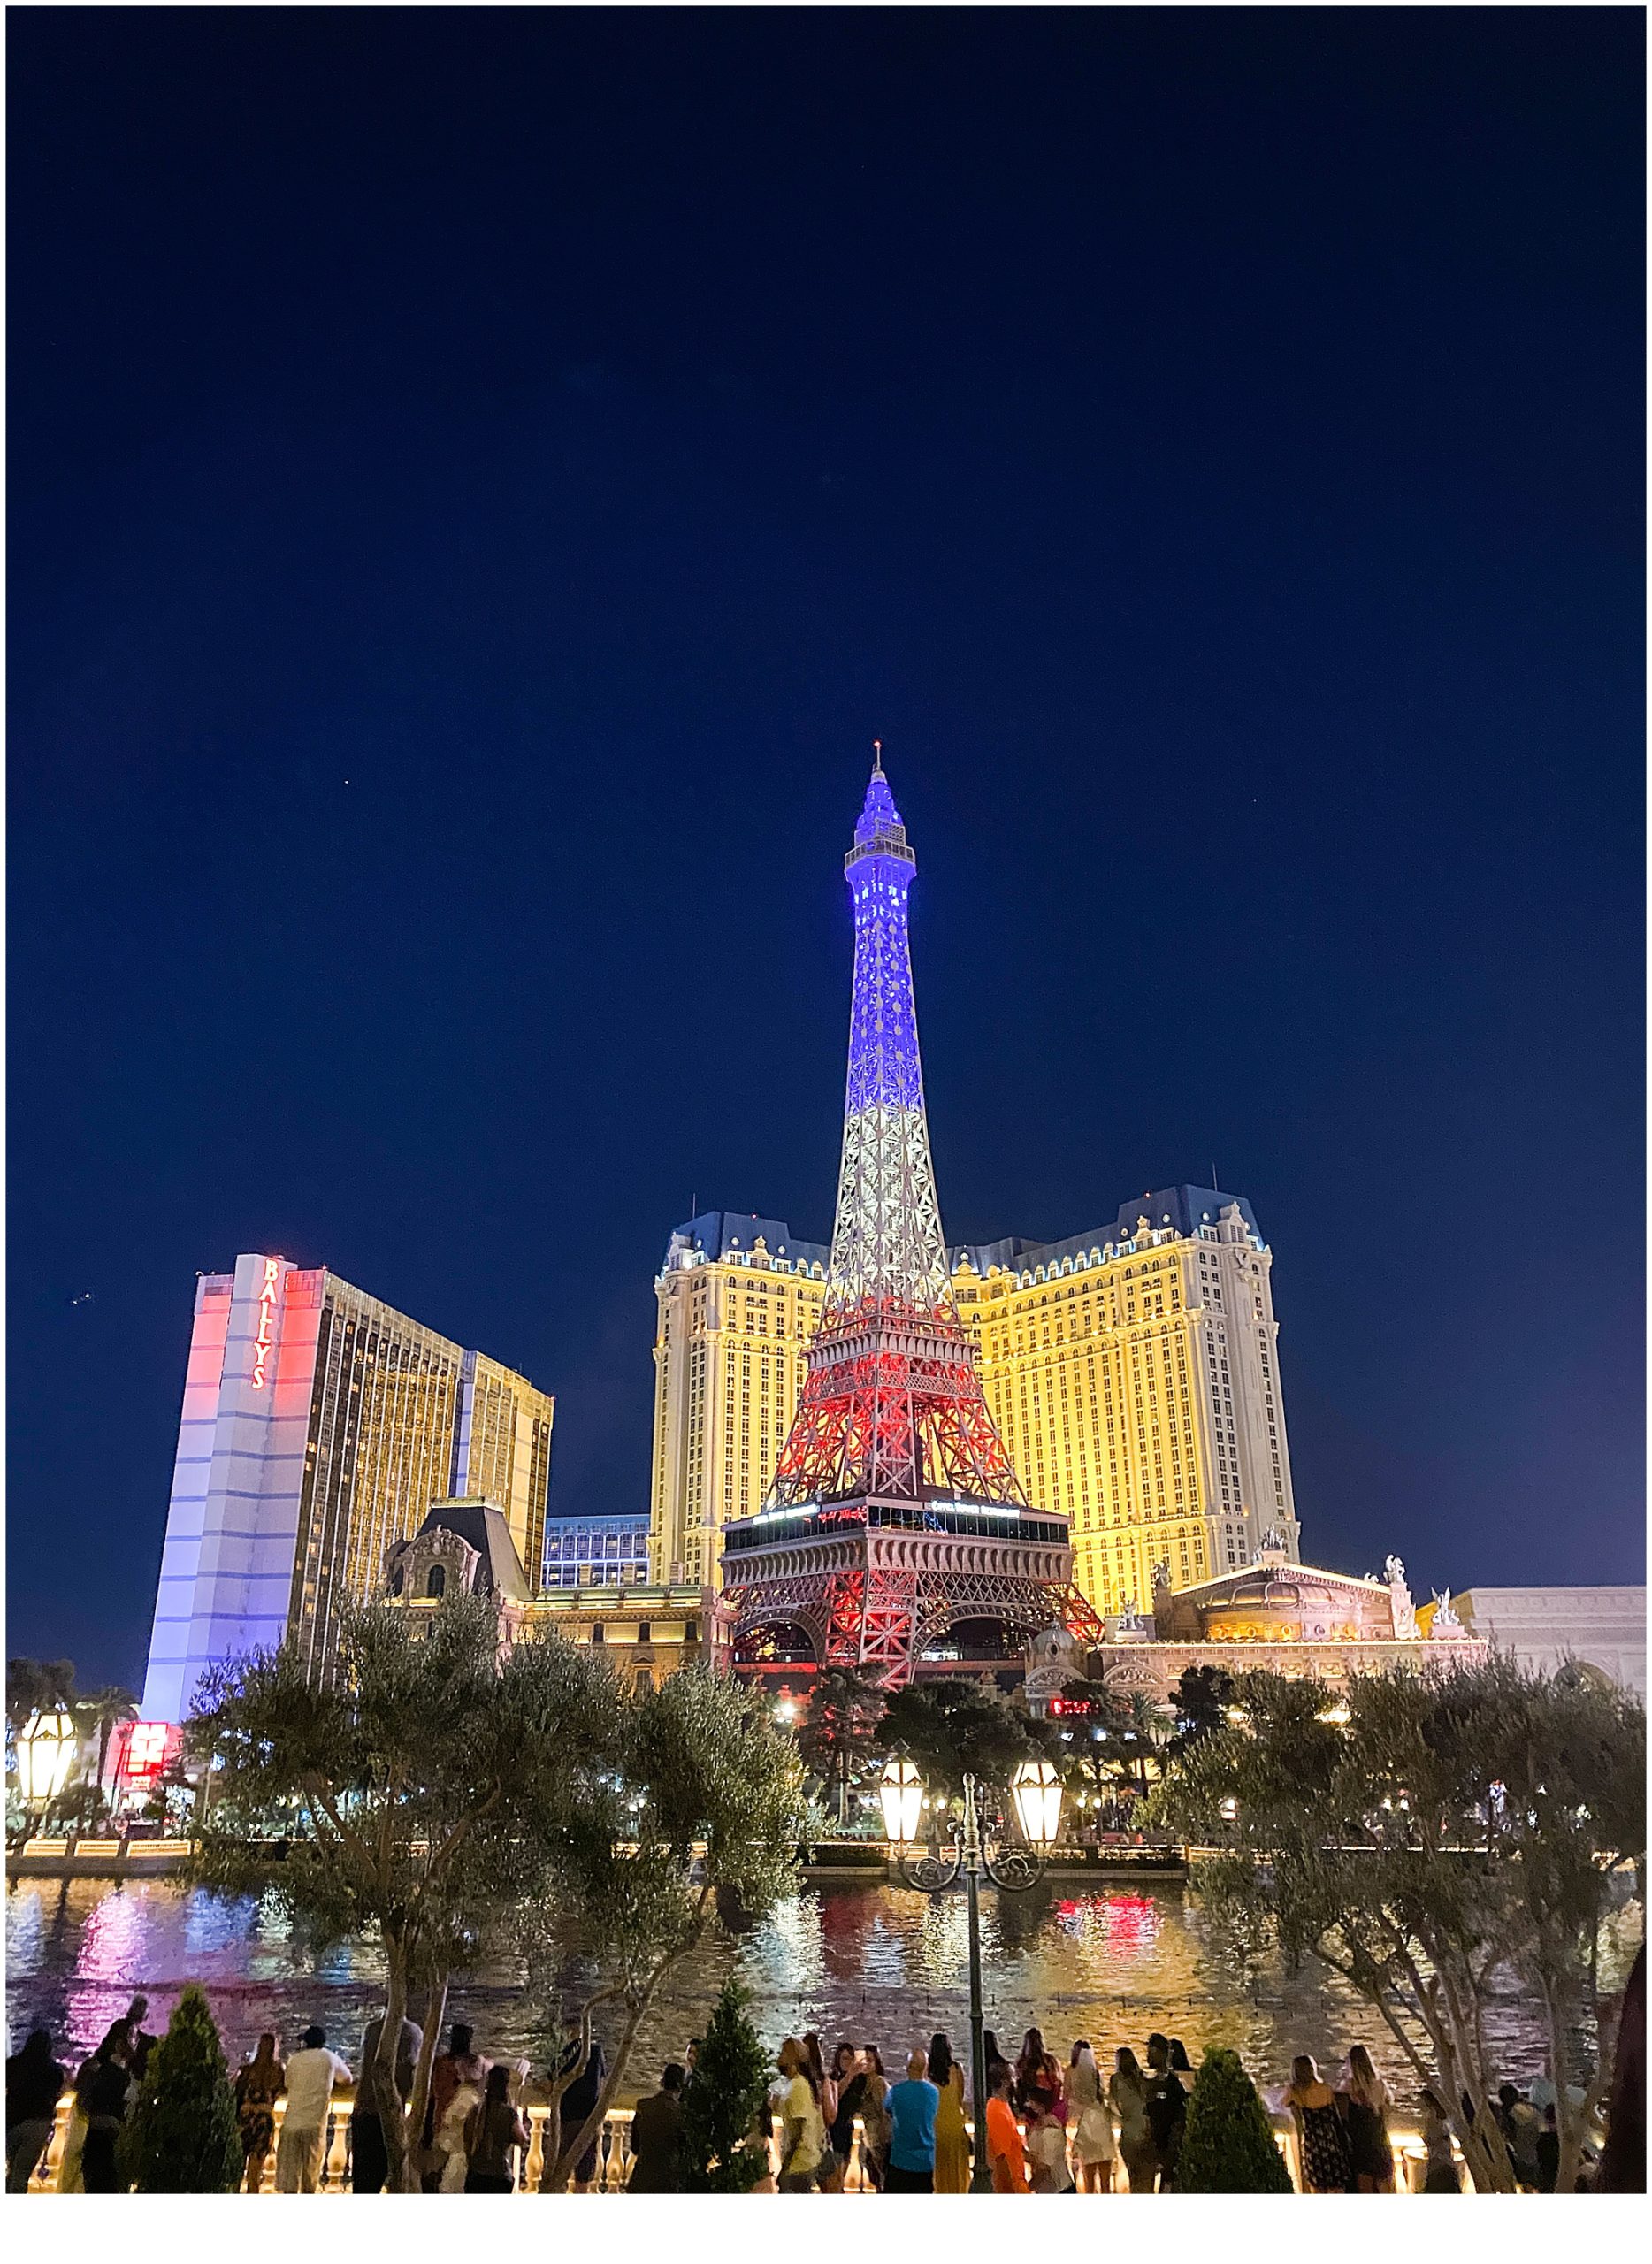 Safety Tips for Spring Break: Paris Hotel Las Vegas, NV 